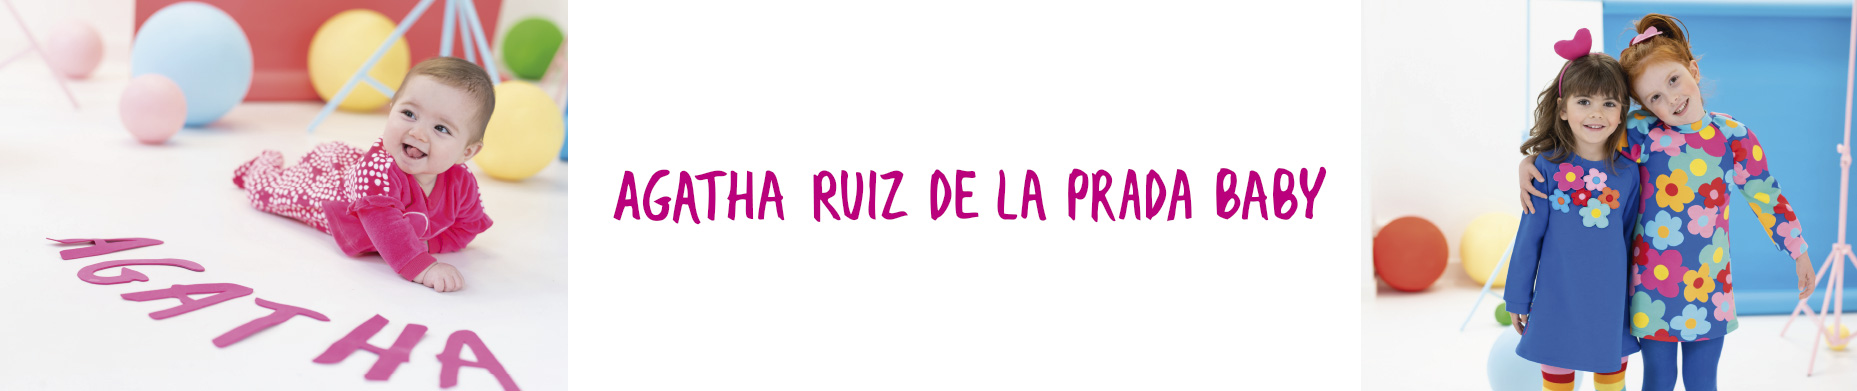 Agatha-Ruiz-banner